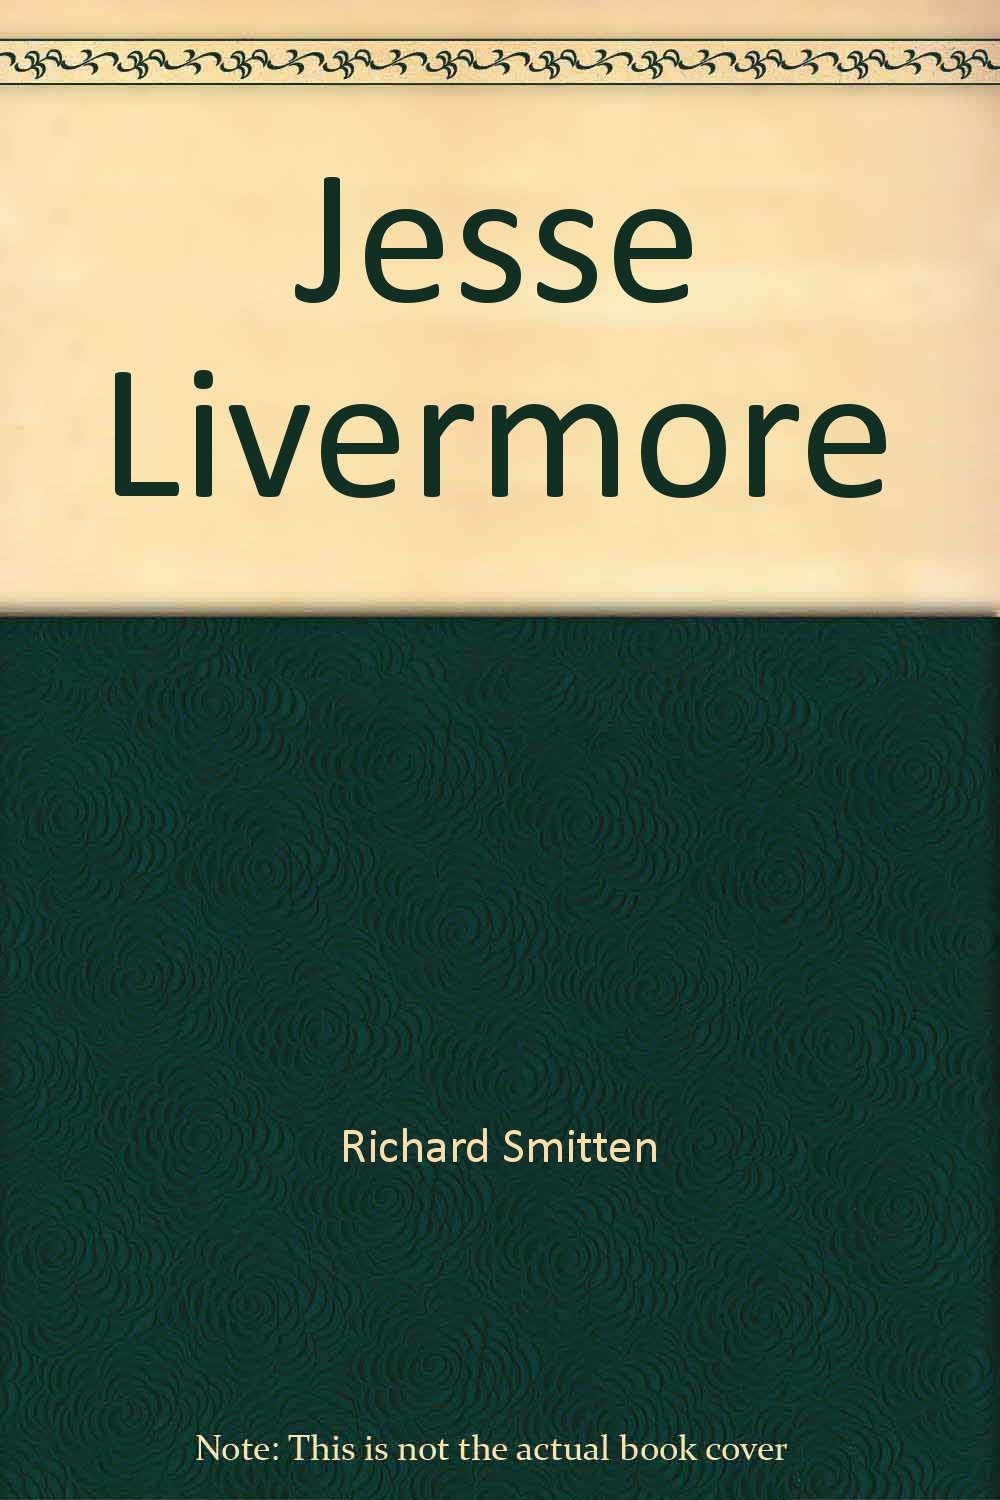 Jesse Livermore